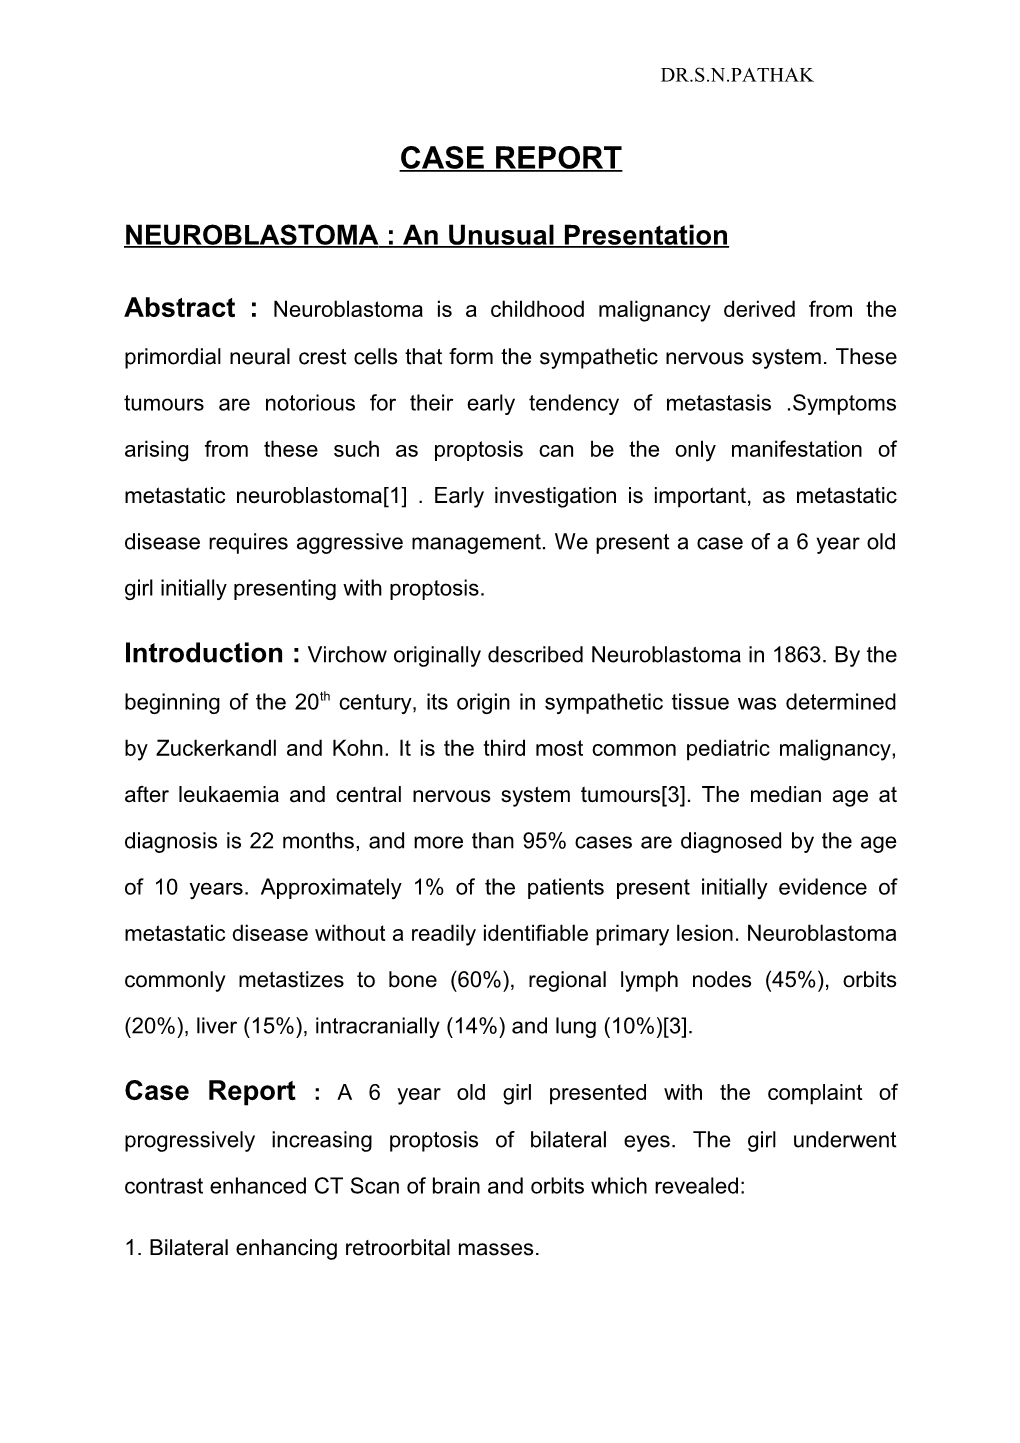 Neuroblastoma : an Unusual Presentation